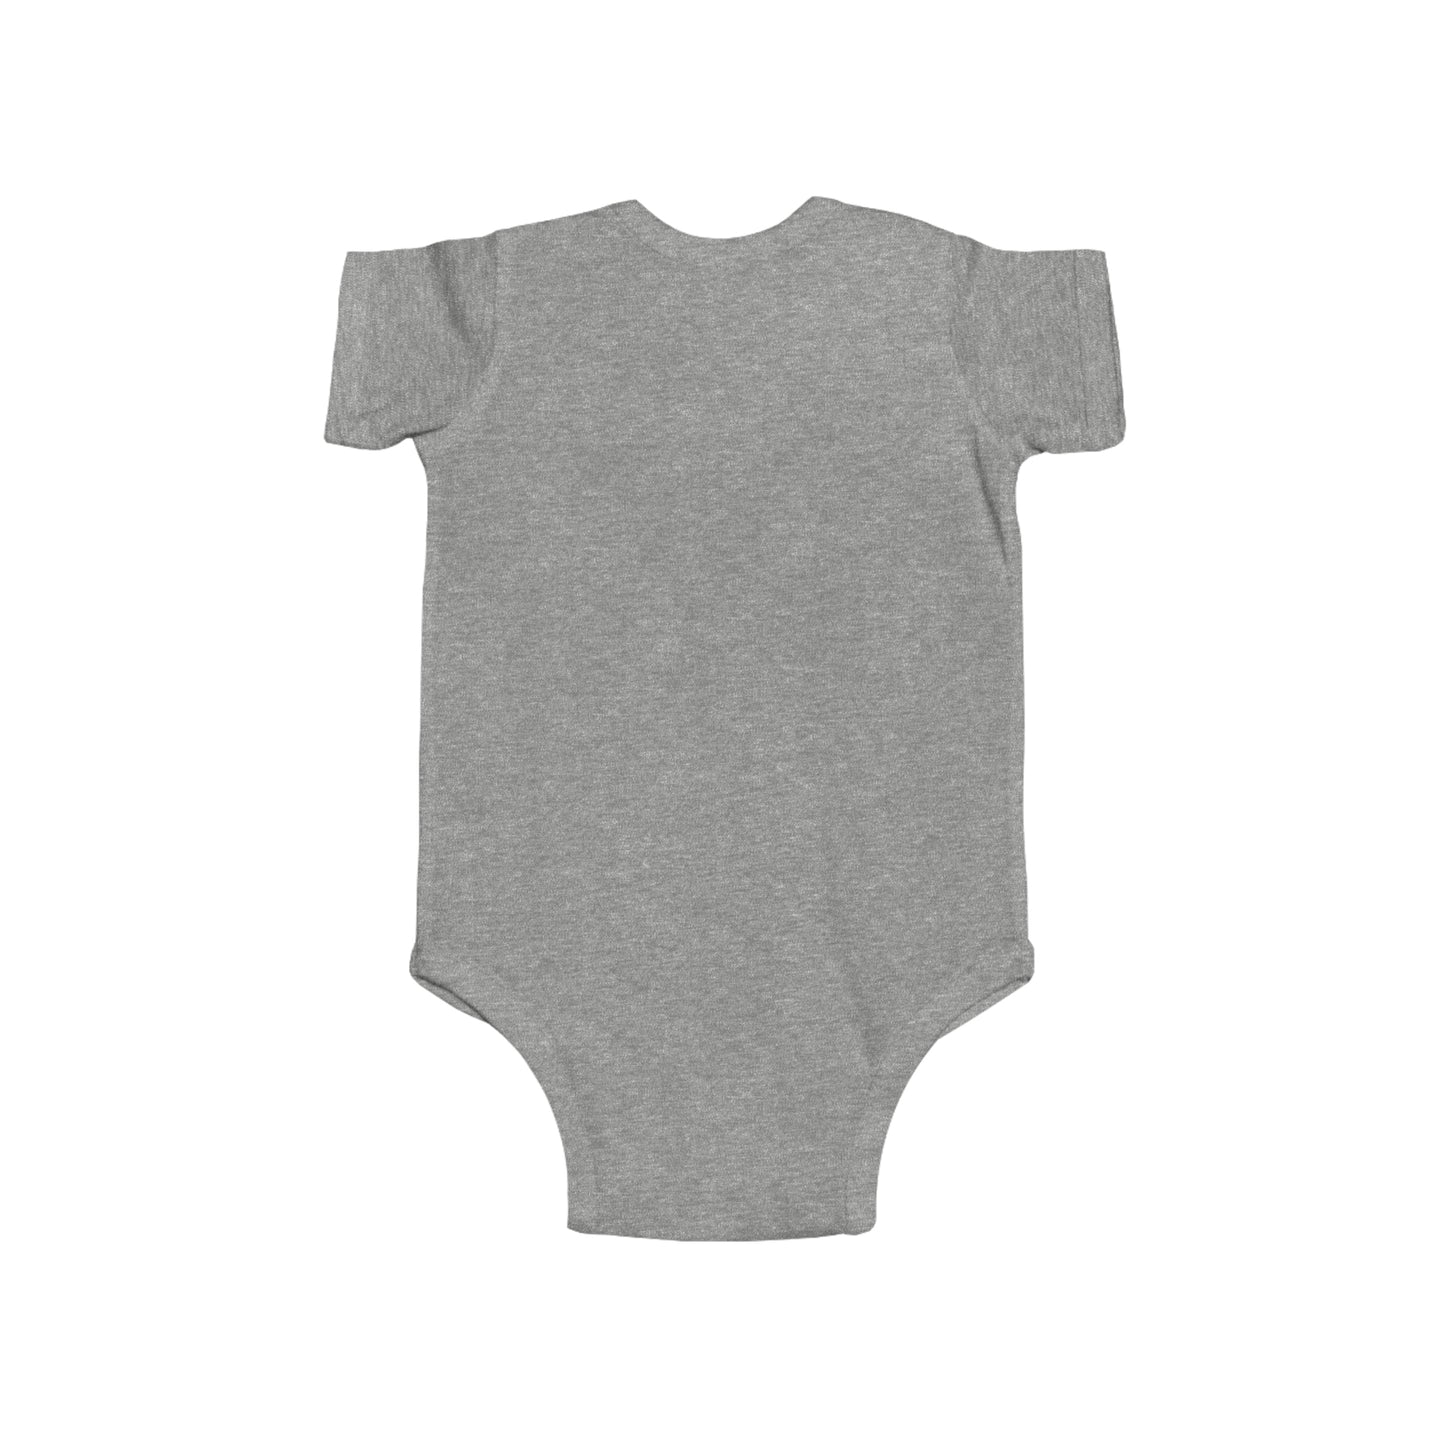 HLGU WILKSILHXW - LITTLE PRINCE/PRINCESS, CHILD OF A CHIEF - Infant Jersey Bodysuit